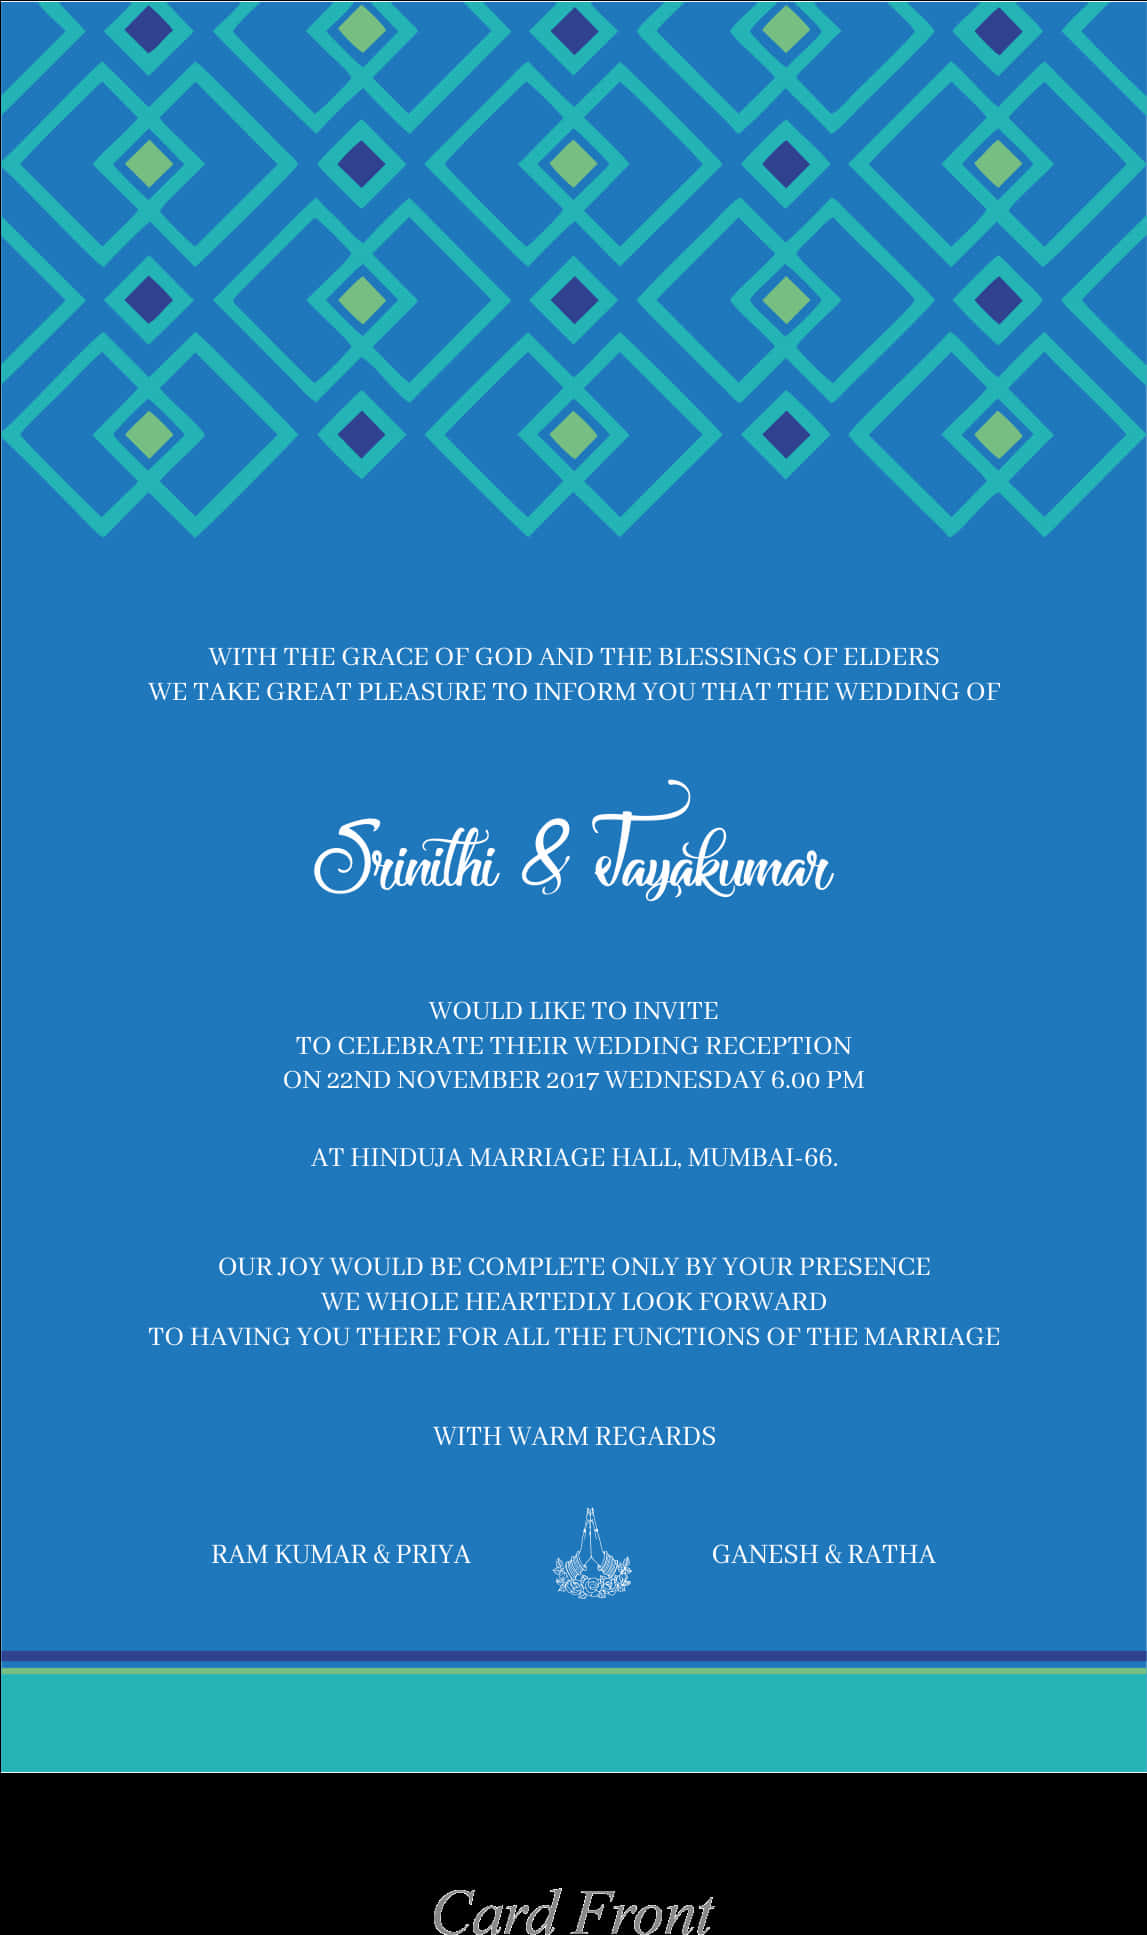 Blue Wedding Card With Geometric Pattern